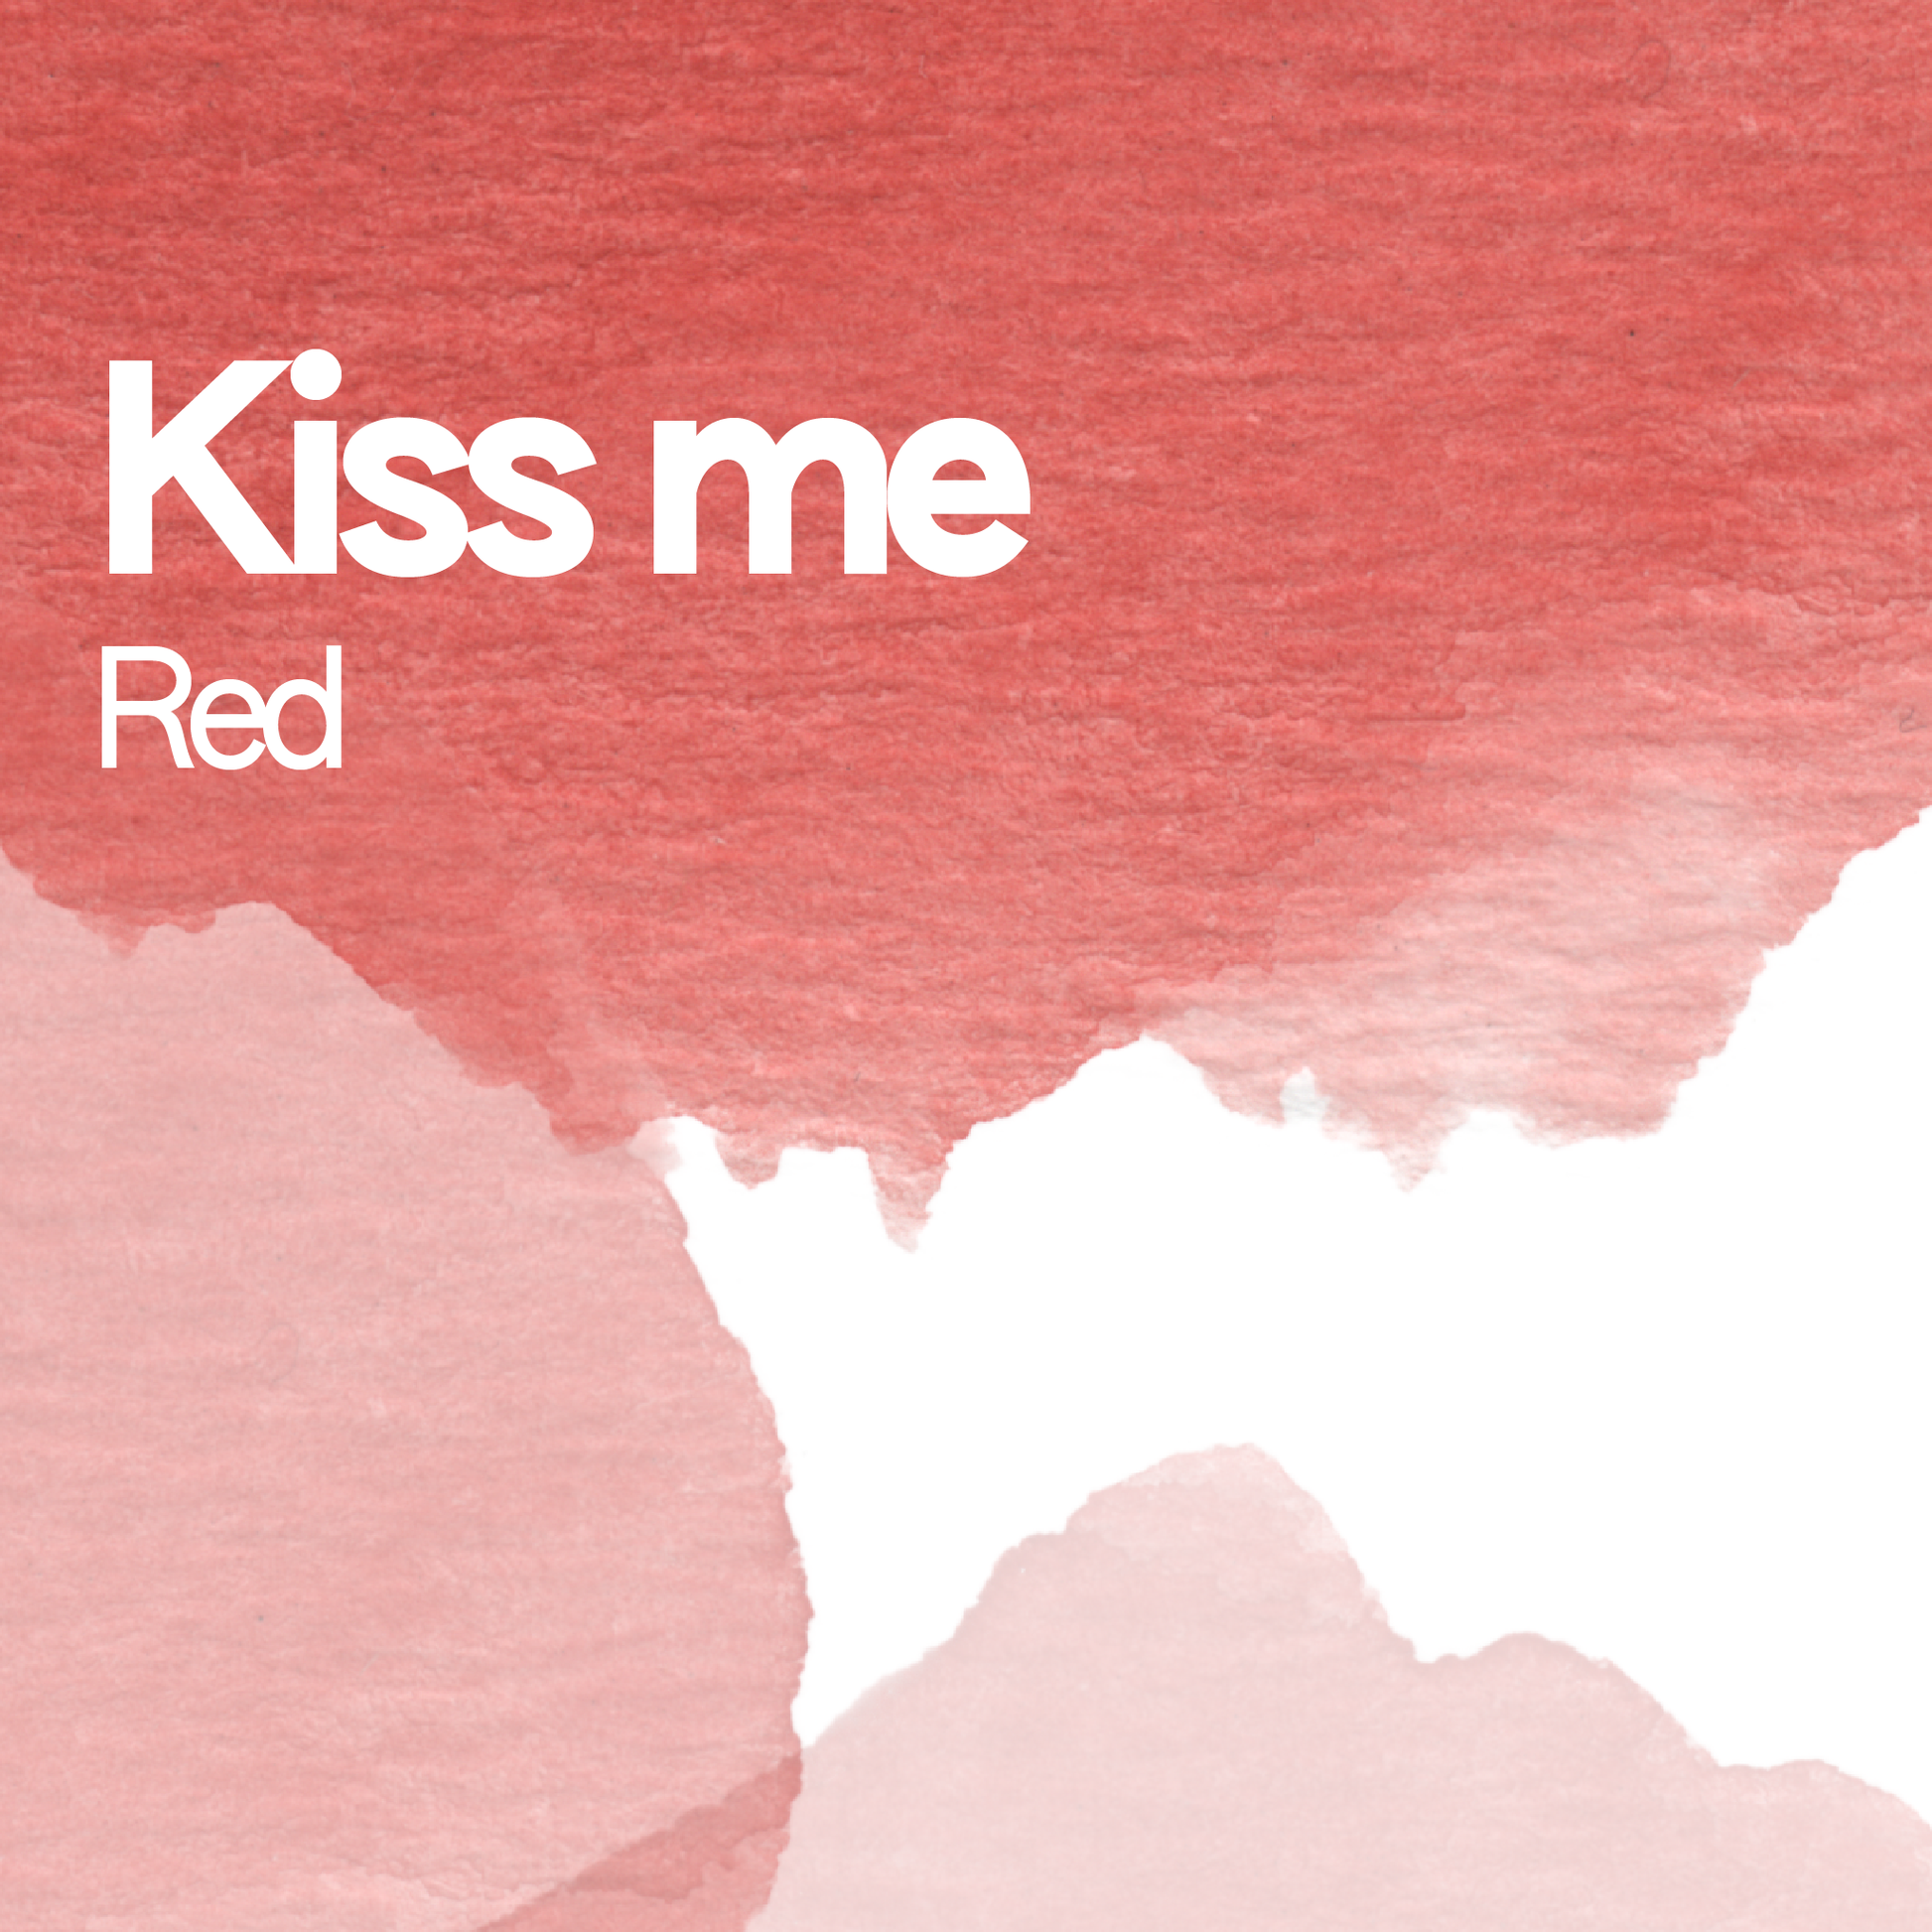 Kiss me Red aquarelle artisanale vegan 